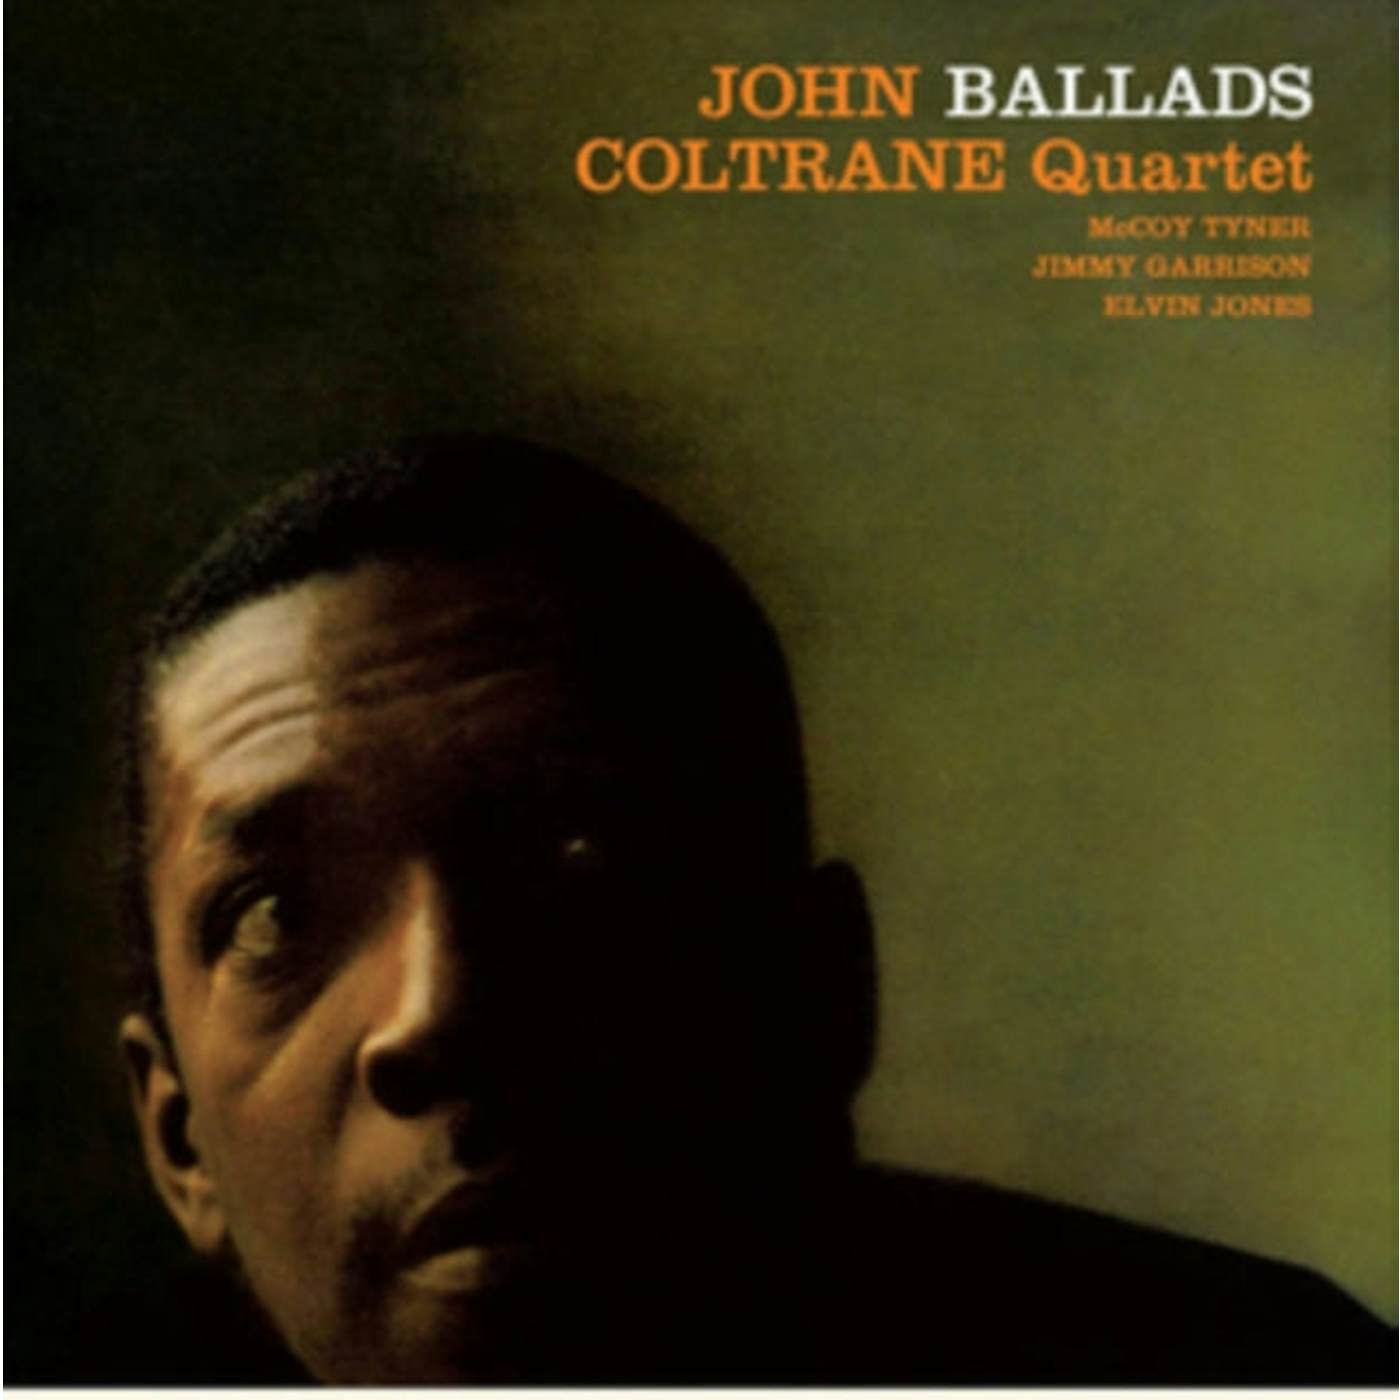 John Coltrane Quartet LP Vinyl Record  Ballads (Limited Solid Orange Vinyl)